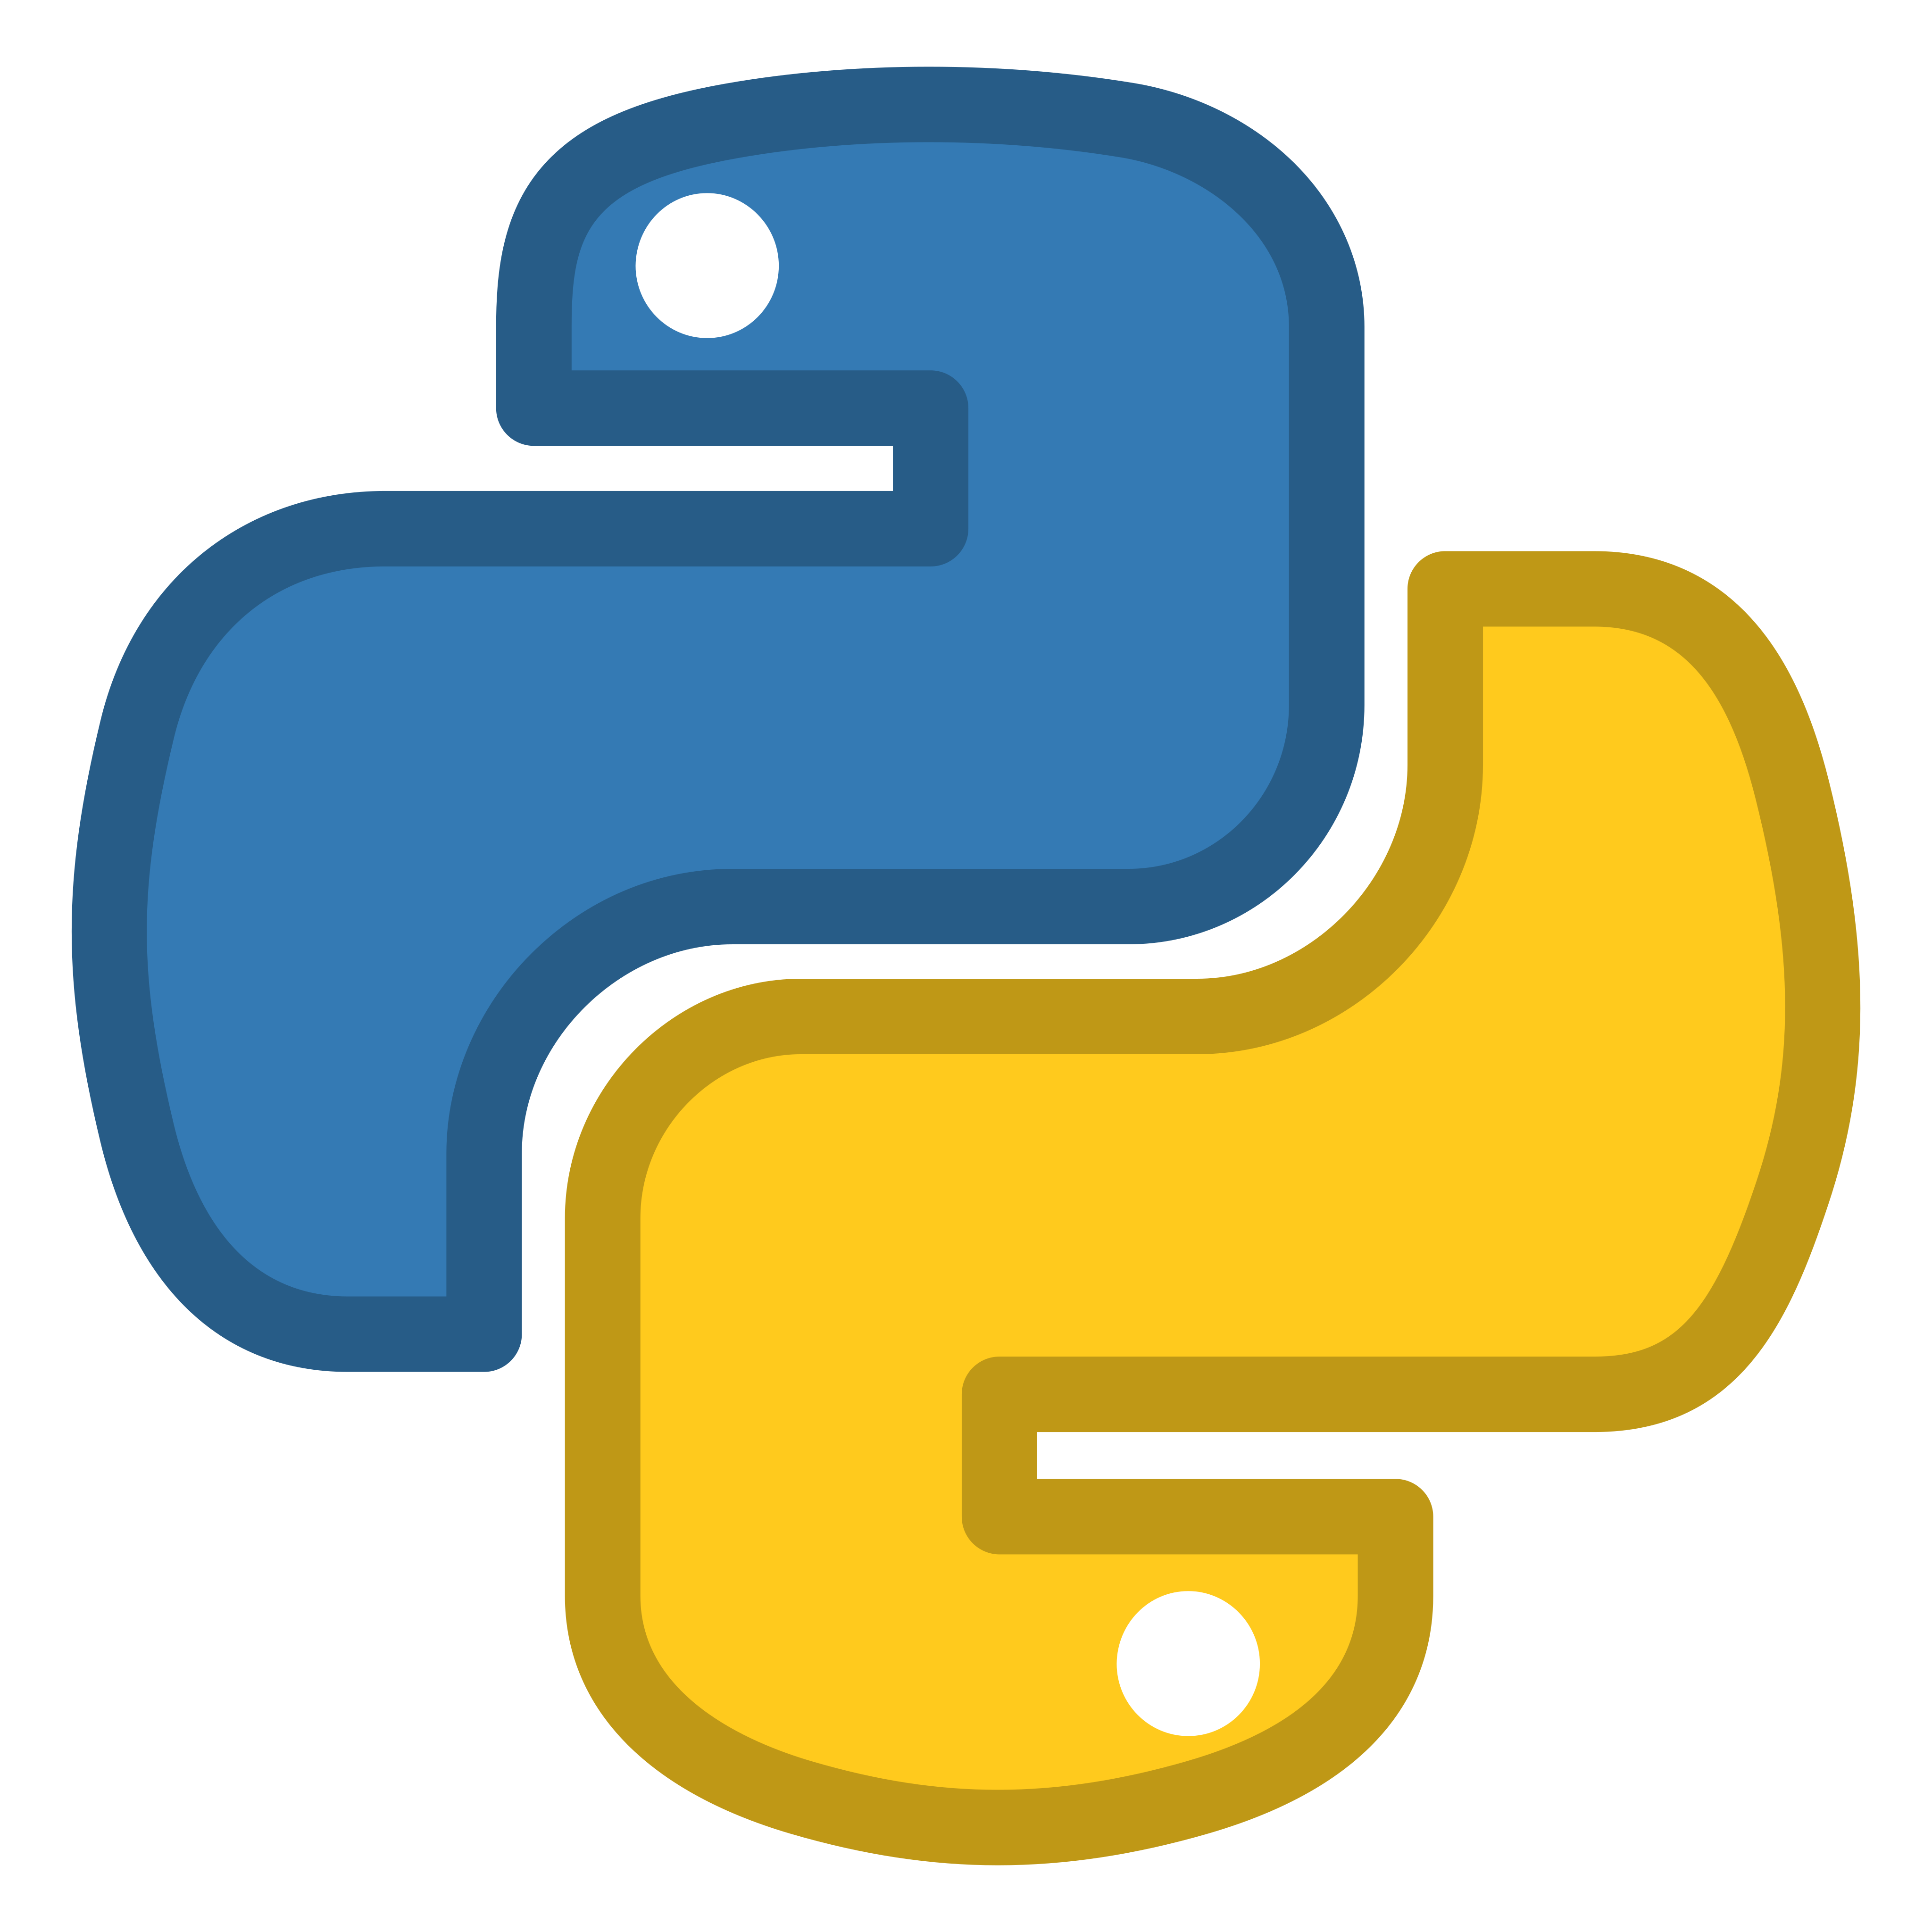 python's logo